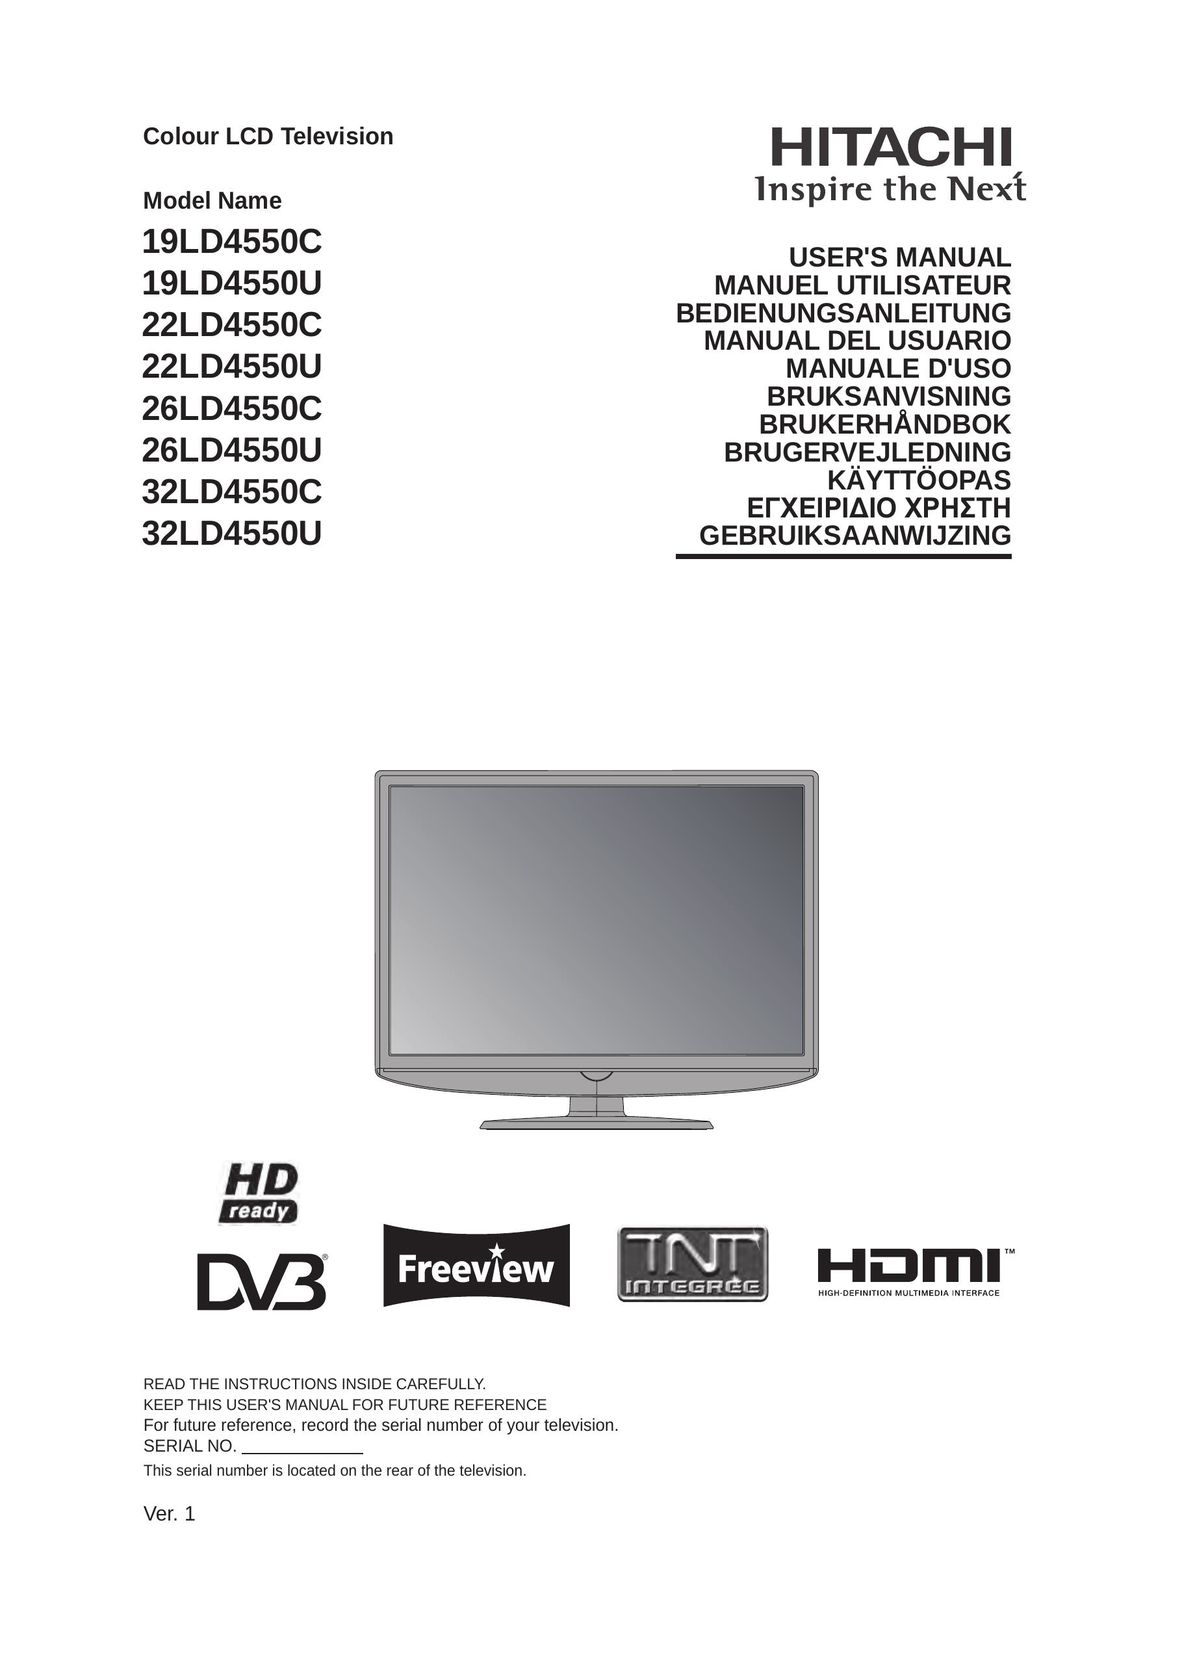 Hitachi 32LD4550C Flat Panel Television User Manual